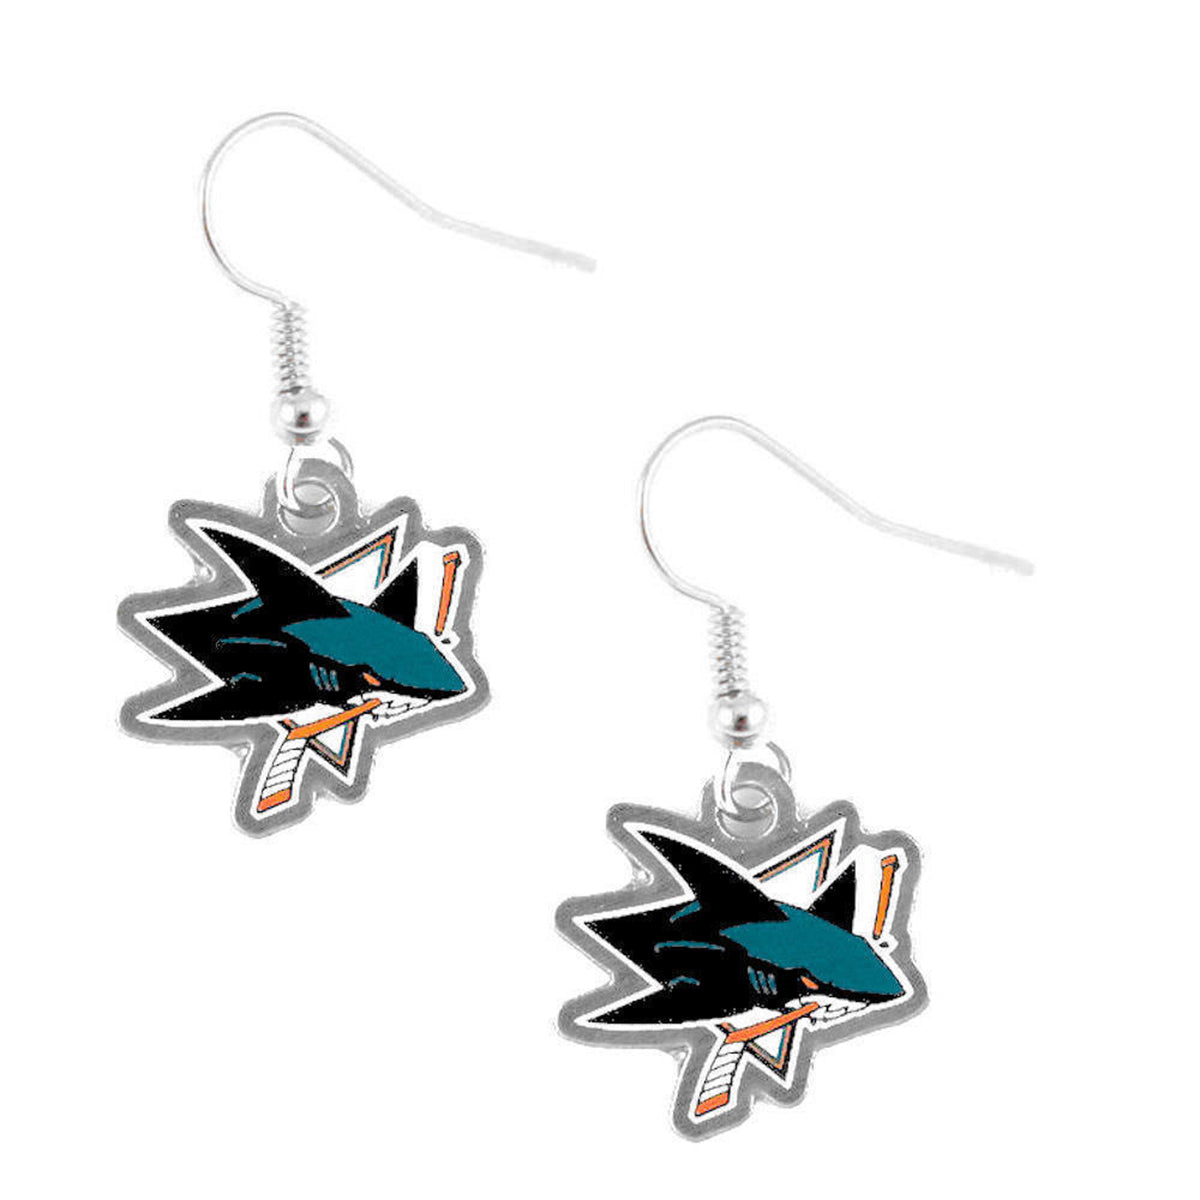 Nhl San Jose Sharks Earrings Unisex Style : 7193-21